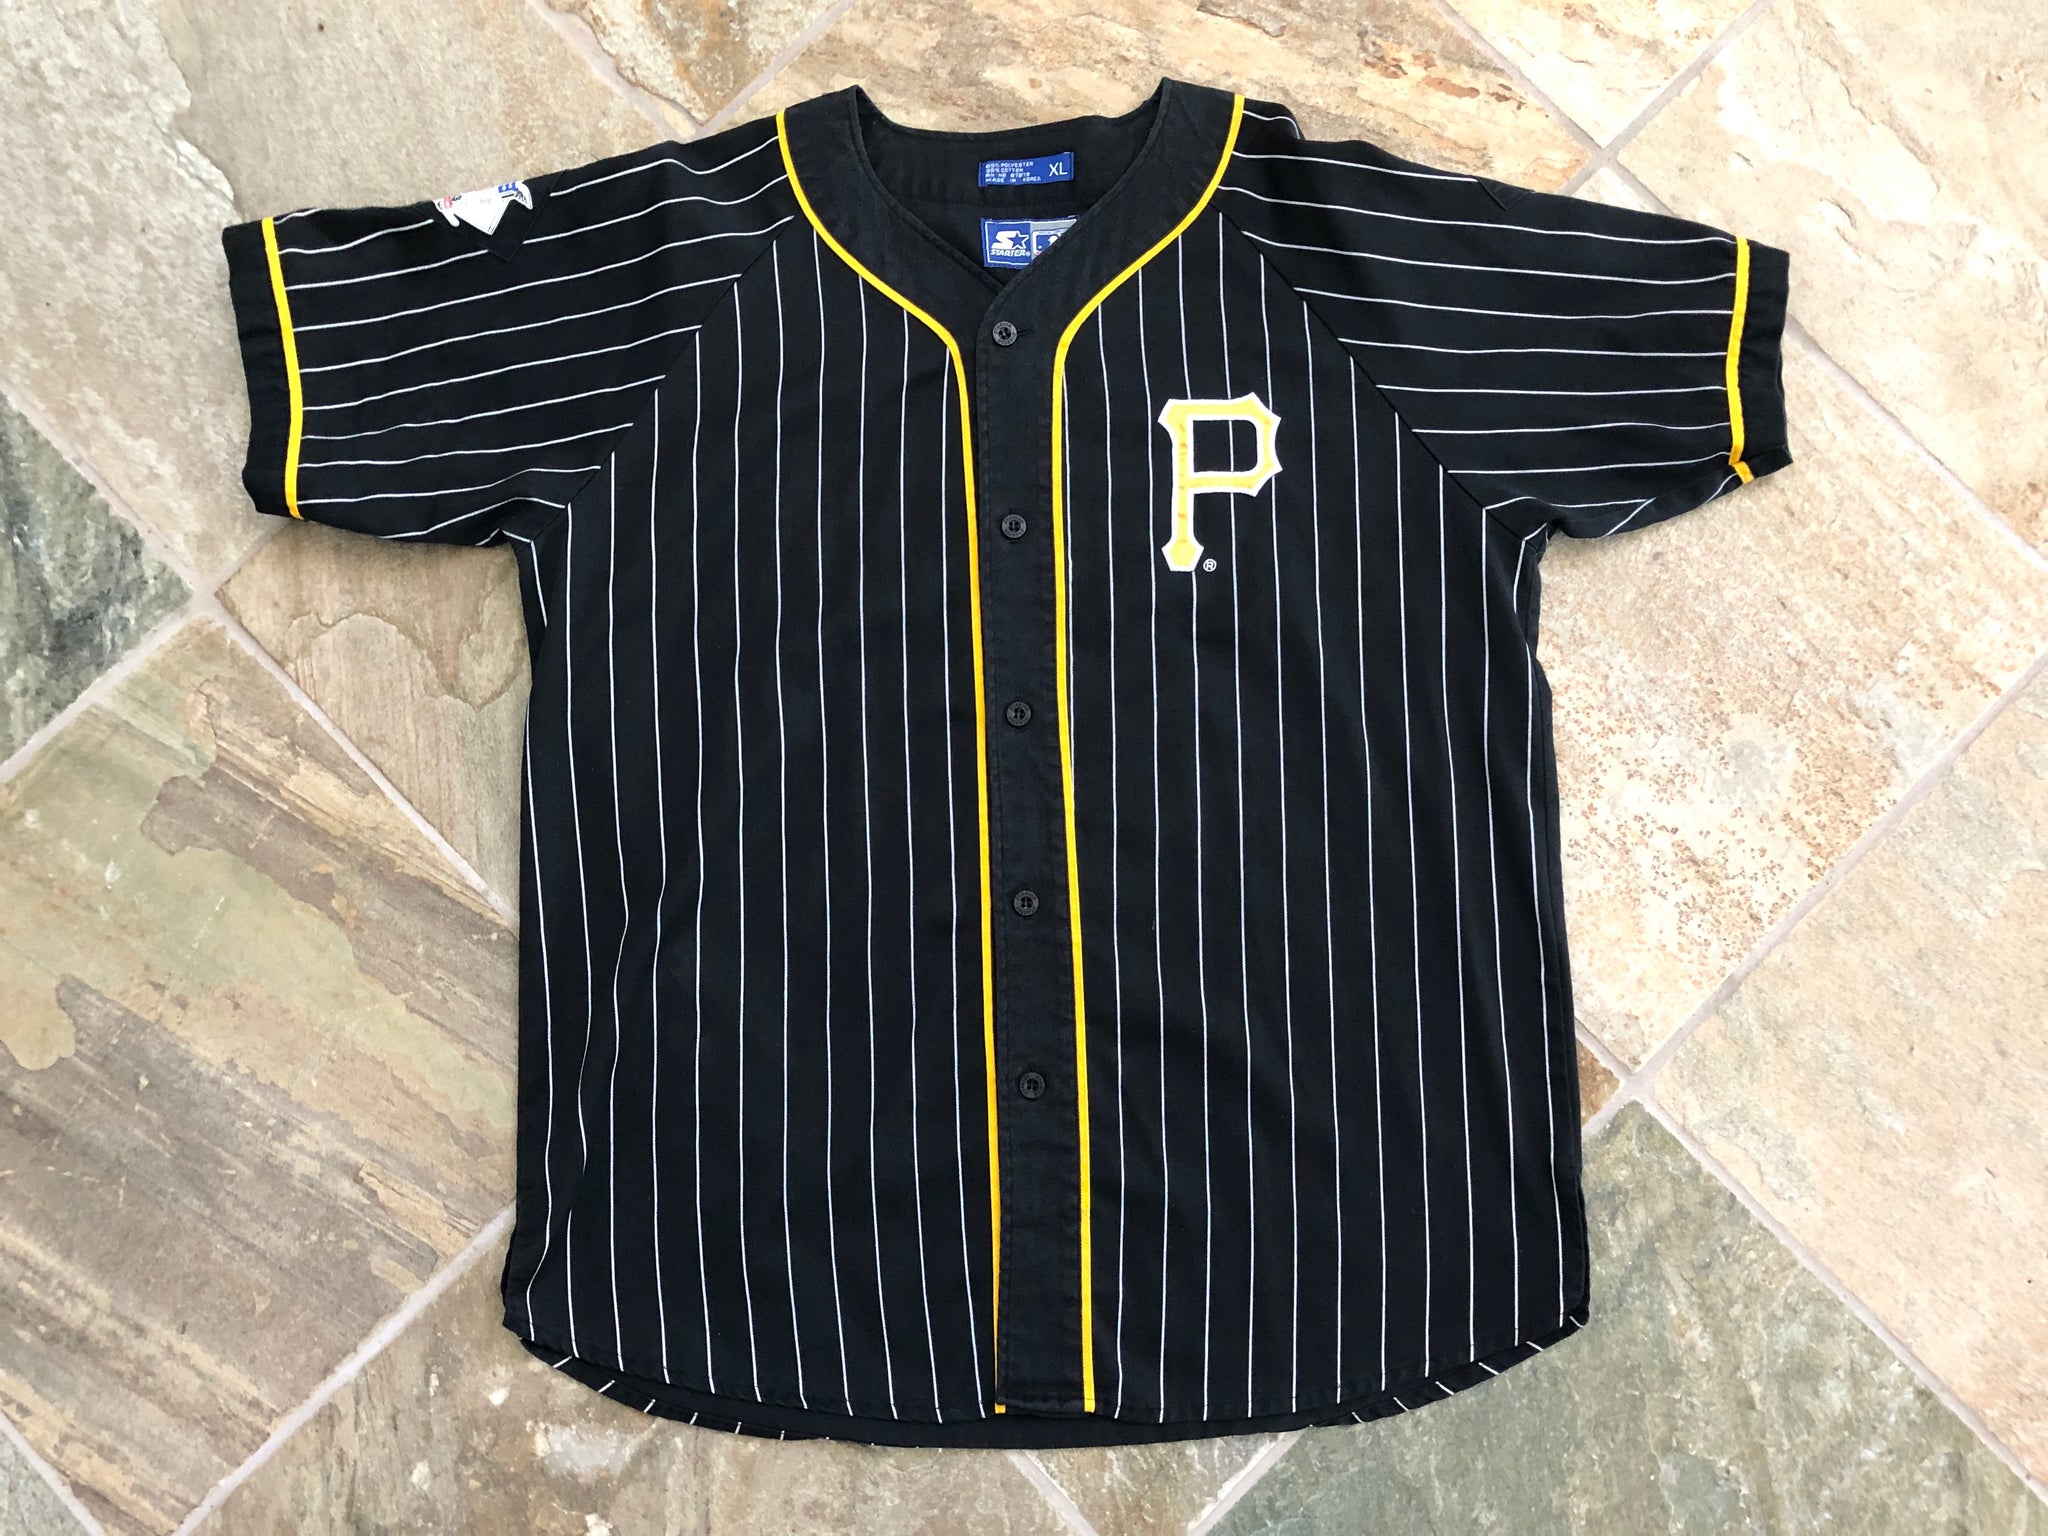 Pittsburgh Pirates MLB BASEBALL SUPER VINTAGE 1970s Size Small Baseball  Jersey!